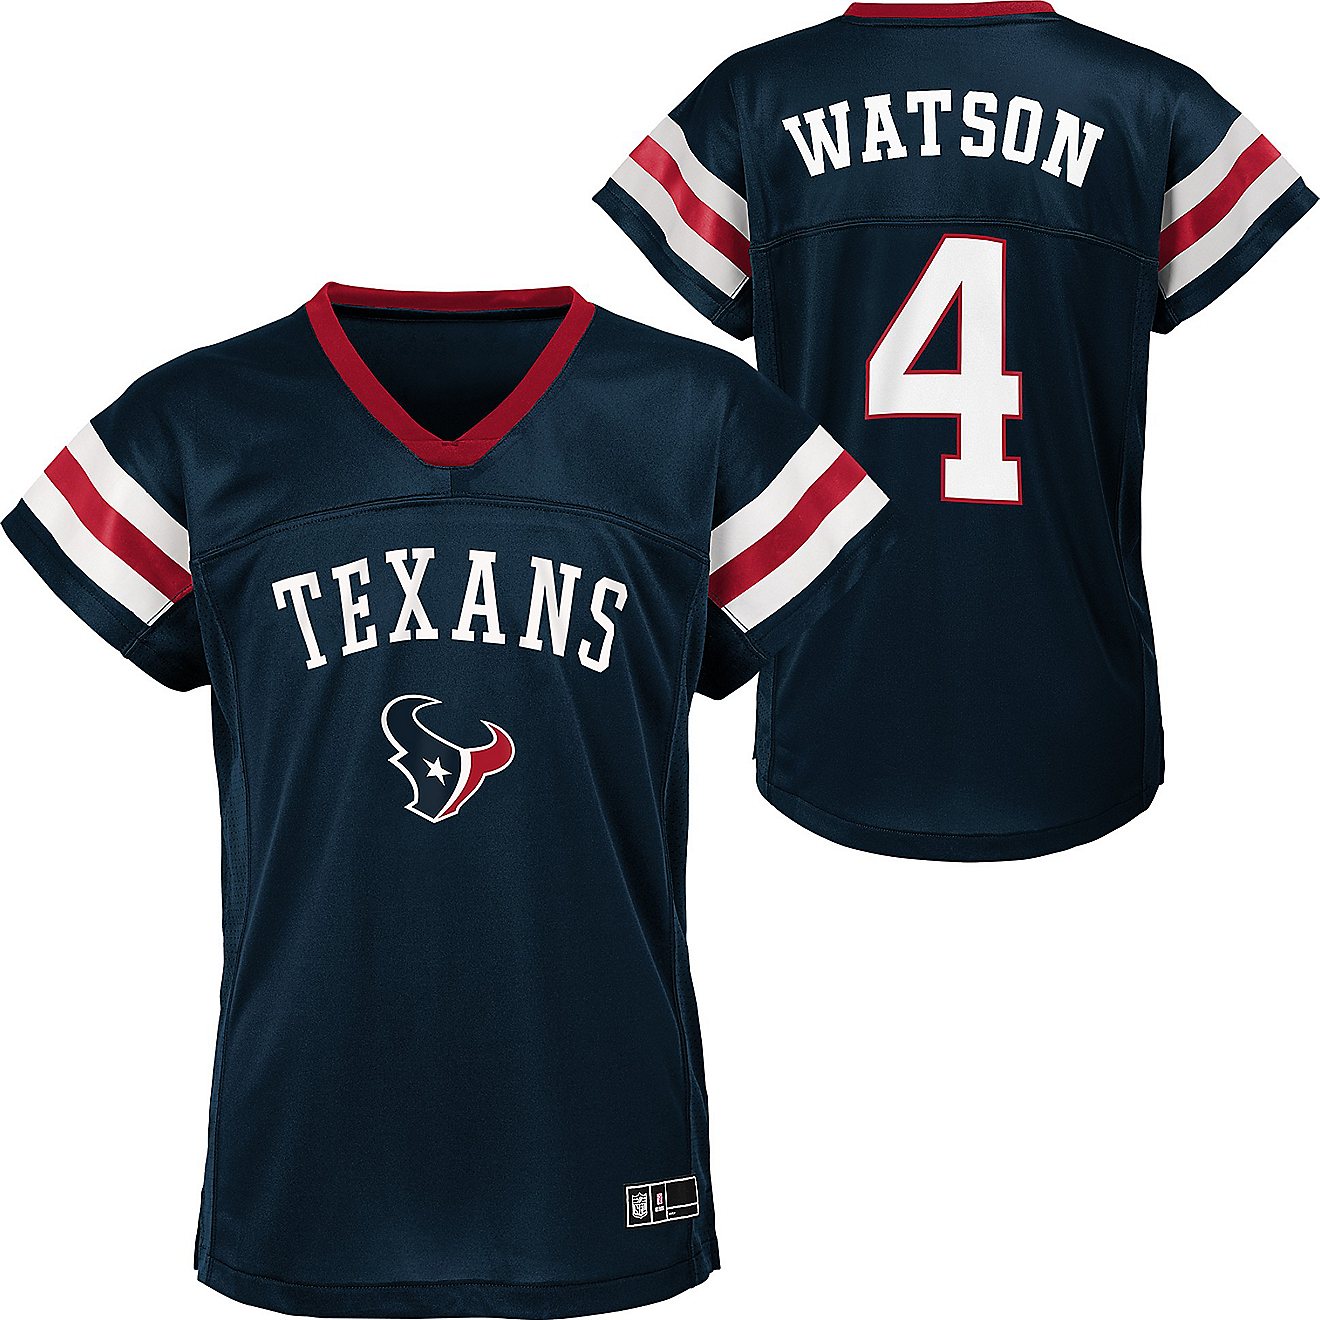 NFL Girls’ Houston Texans Fashion Fan Gear T-shirt                                                                             - view number 1